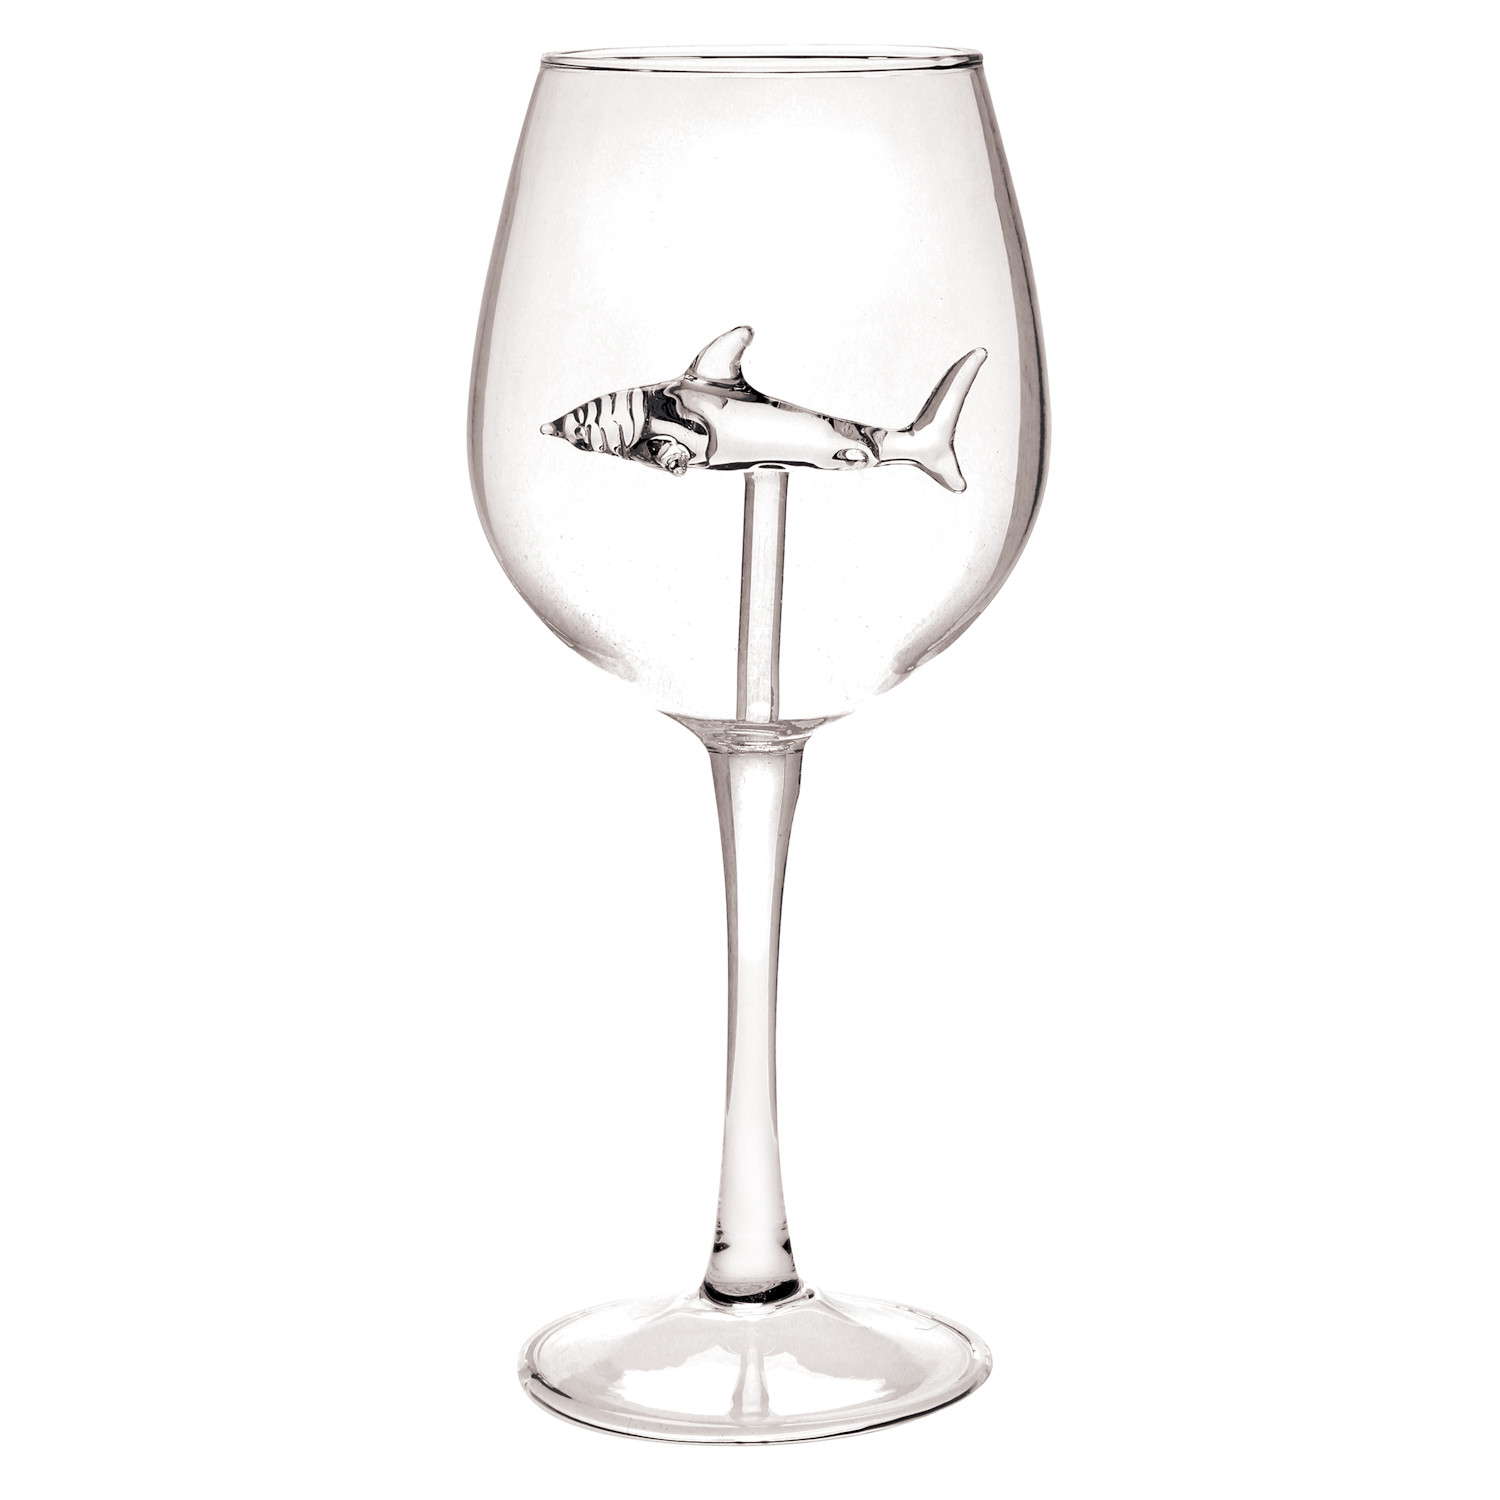 Details about   Built-In Shark Goblet Glass Wine Glass Wine Glass Shark Glass Red Wine R7W3 